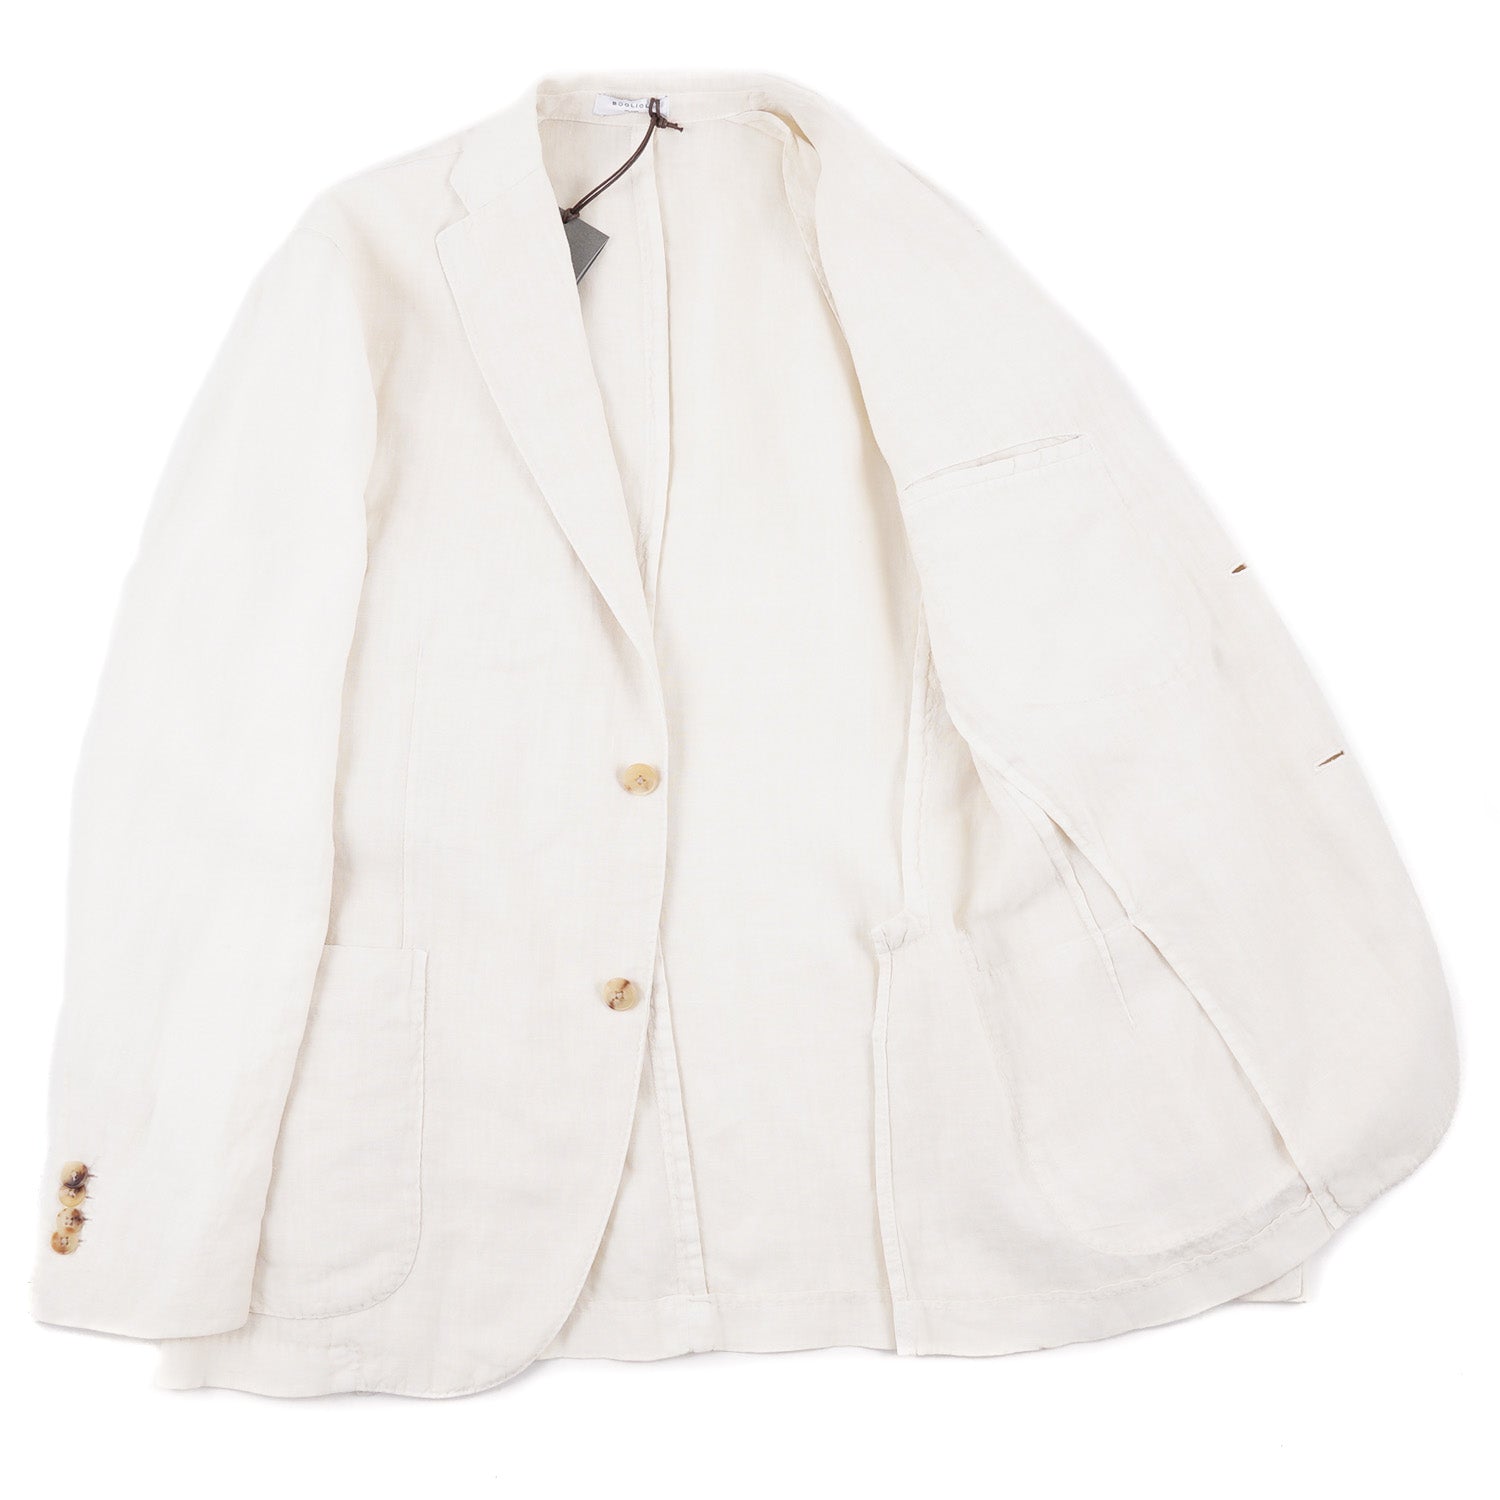 Boglioli Pure Linen 'K Jacket' Sport Coat - Top Shelf Apparel